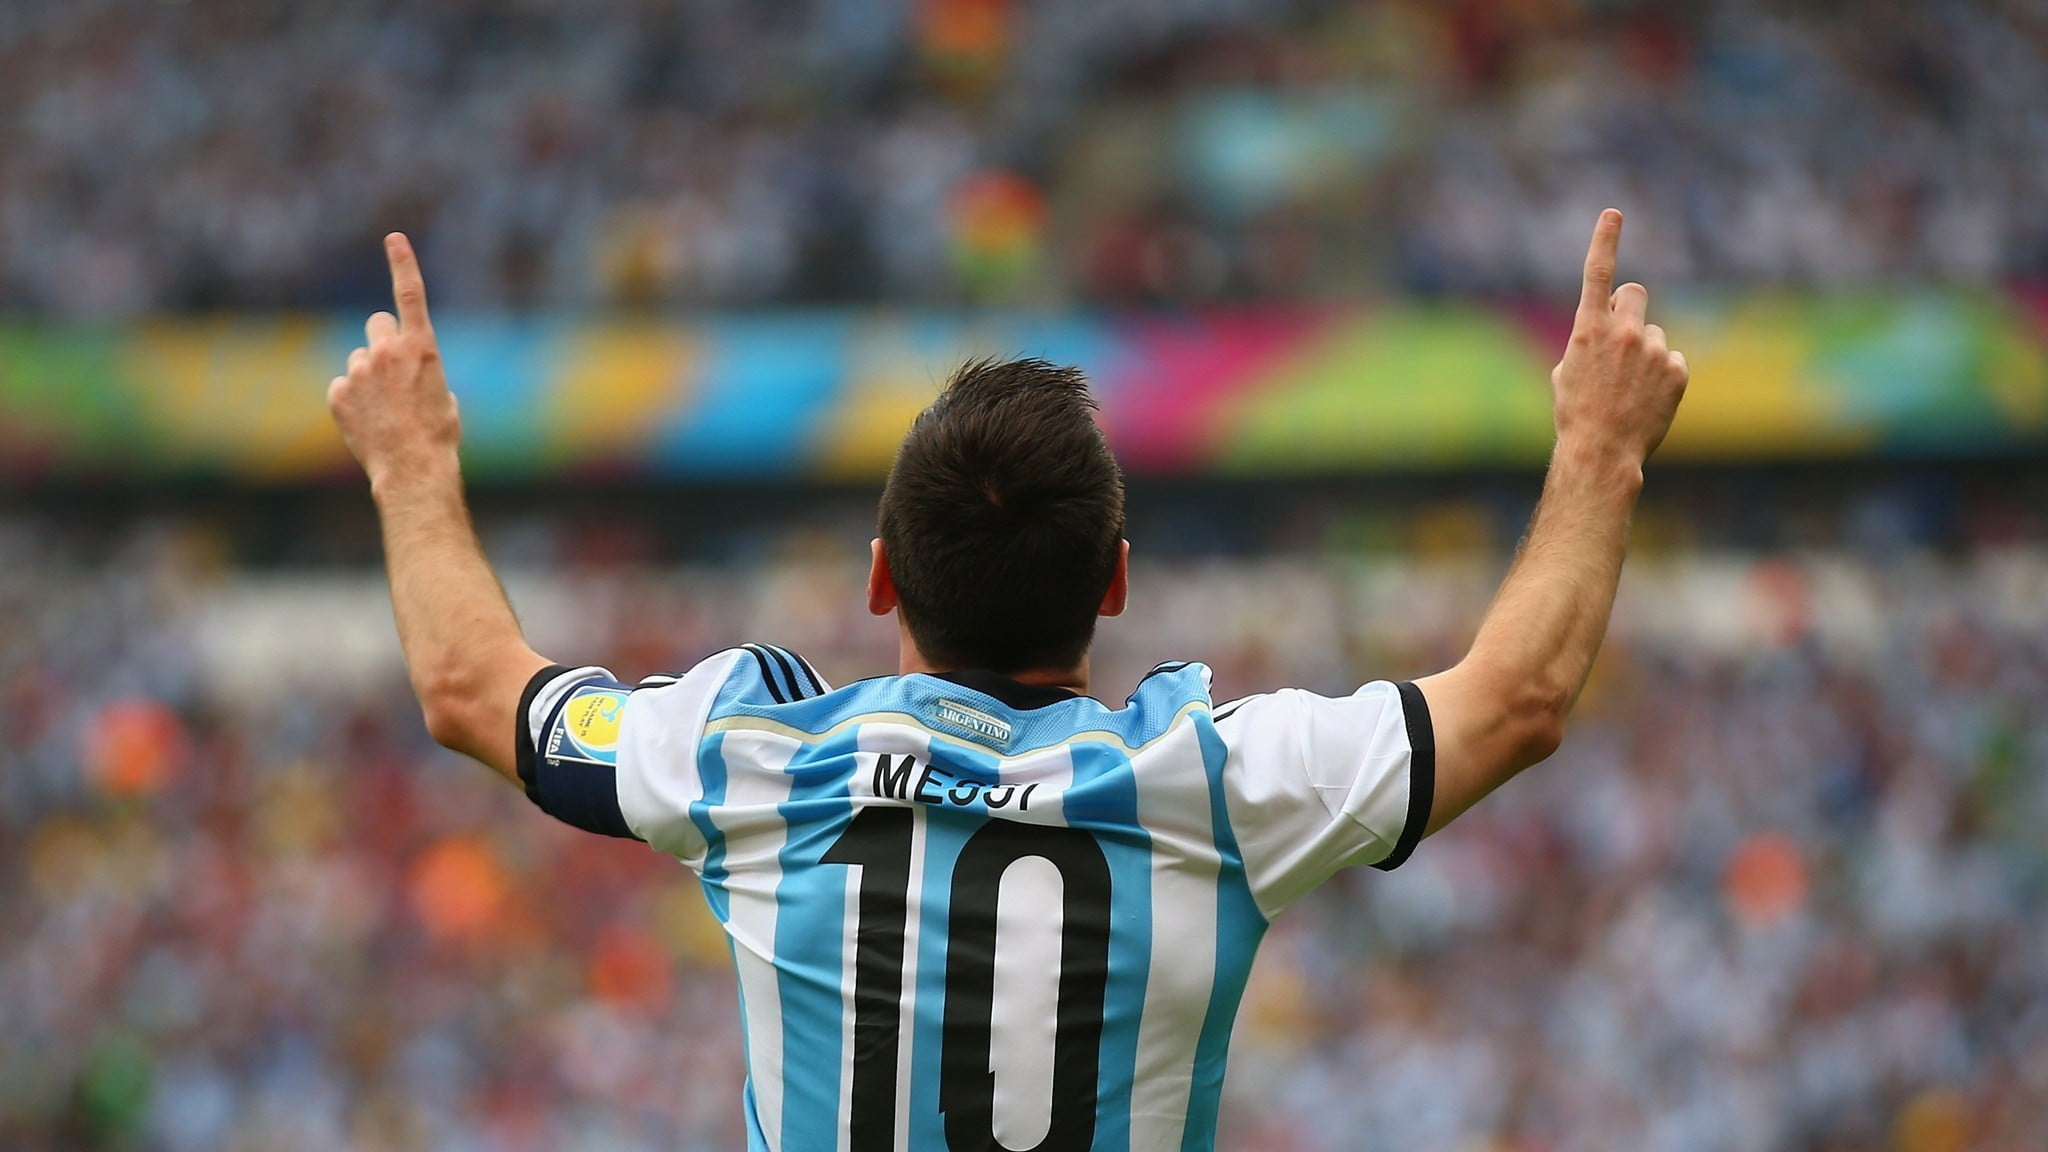 Lionel Messi 10, Argentina, soccer, men, sport, human arm, arms raised